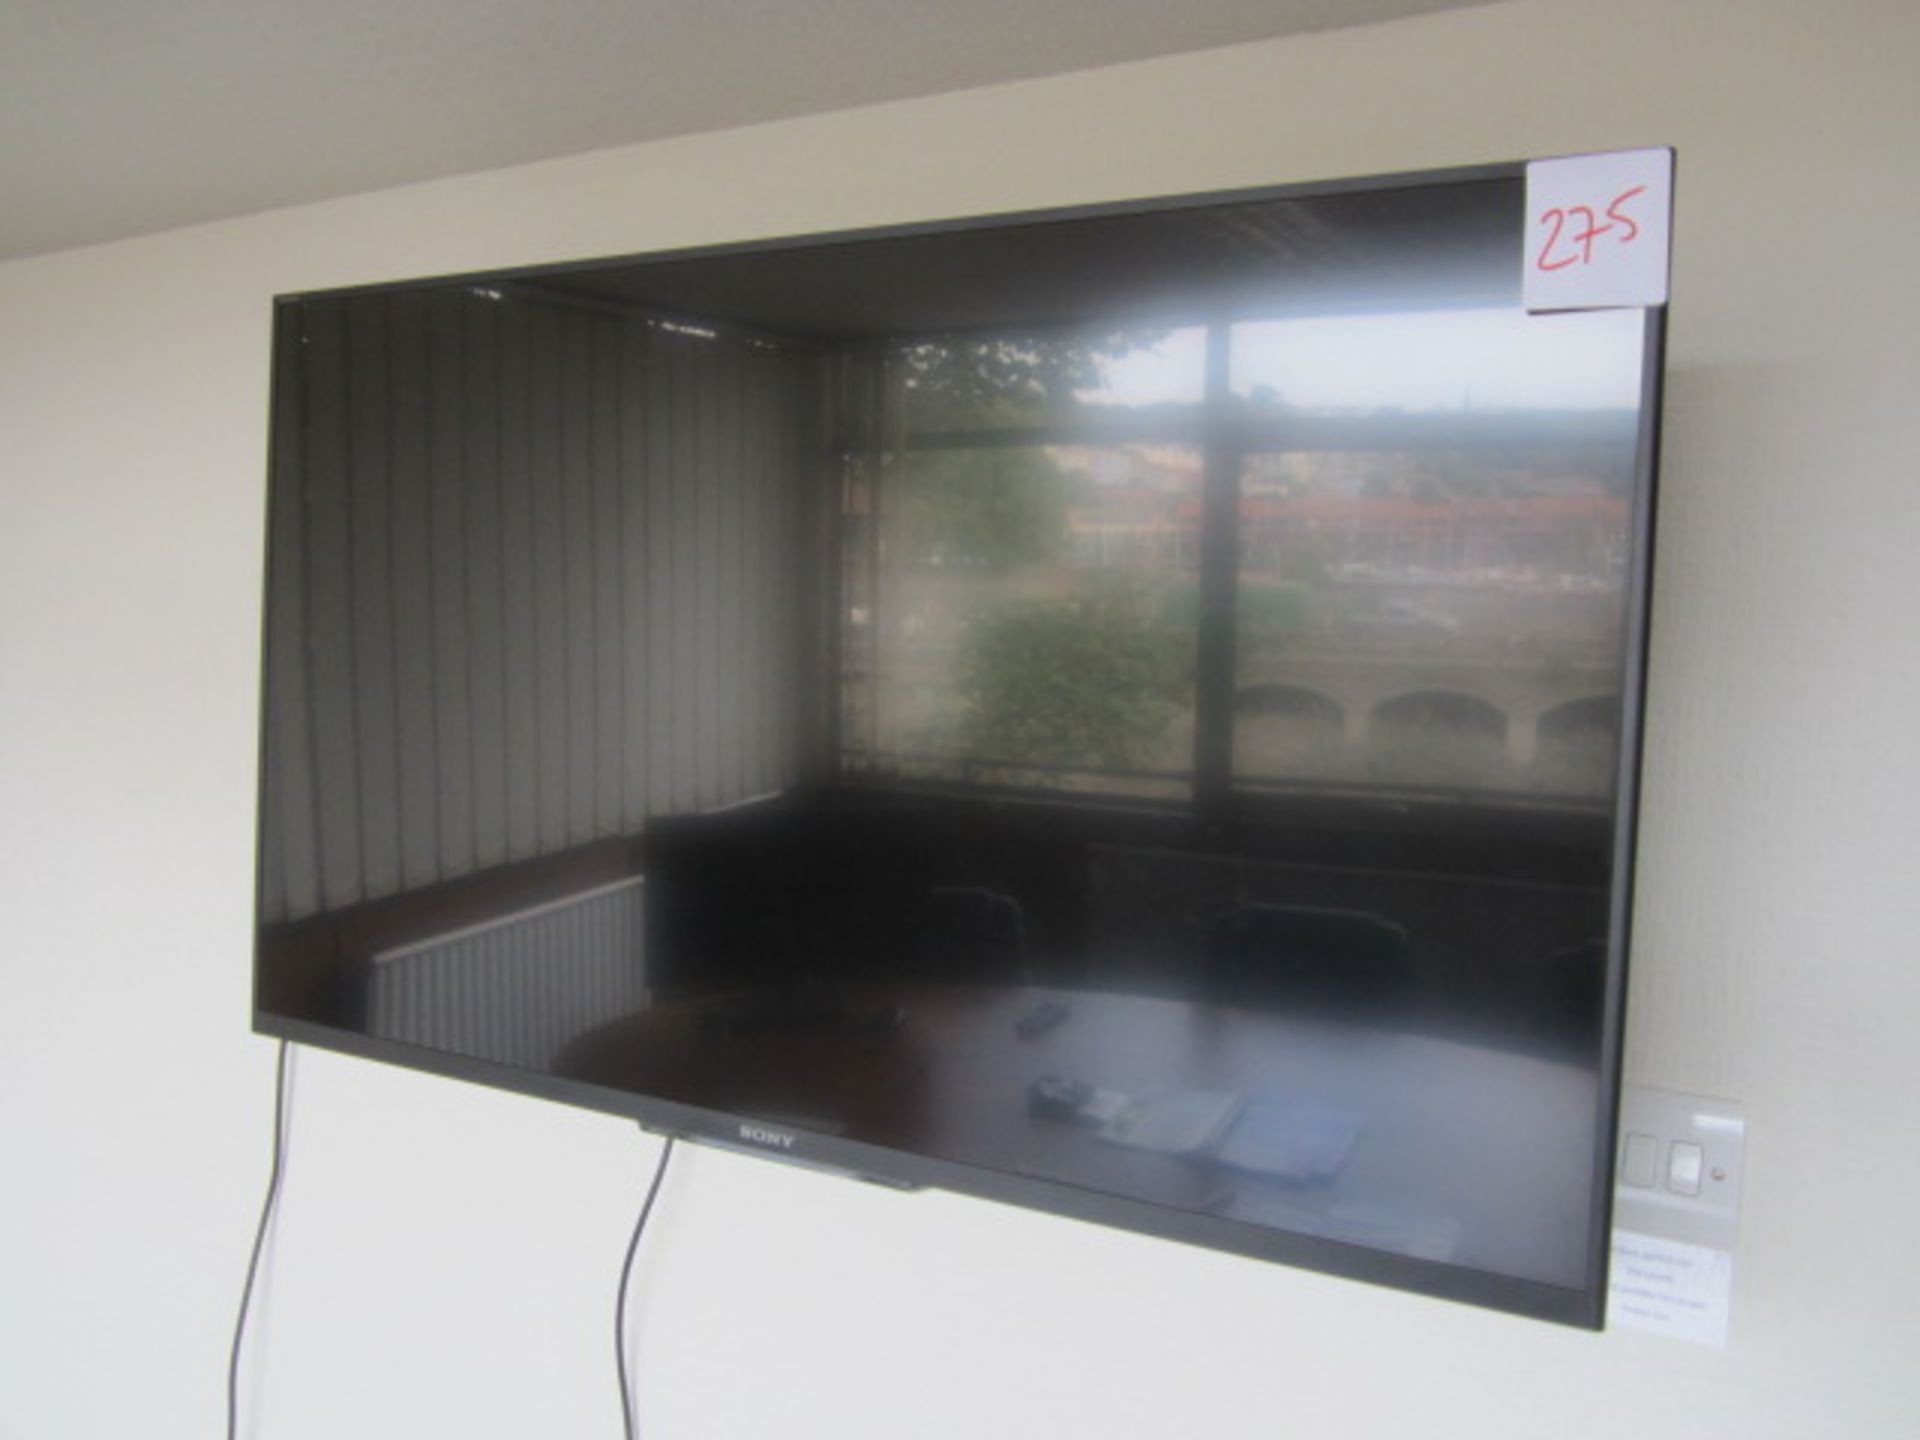 Sony Wall mounted monitor, model KDL-42W705B, Fujitsu computer tower and keyboard - Image 2 of 4